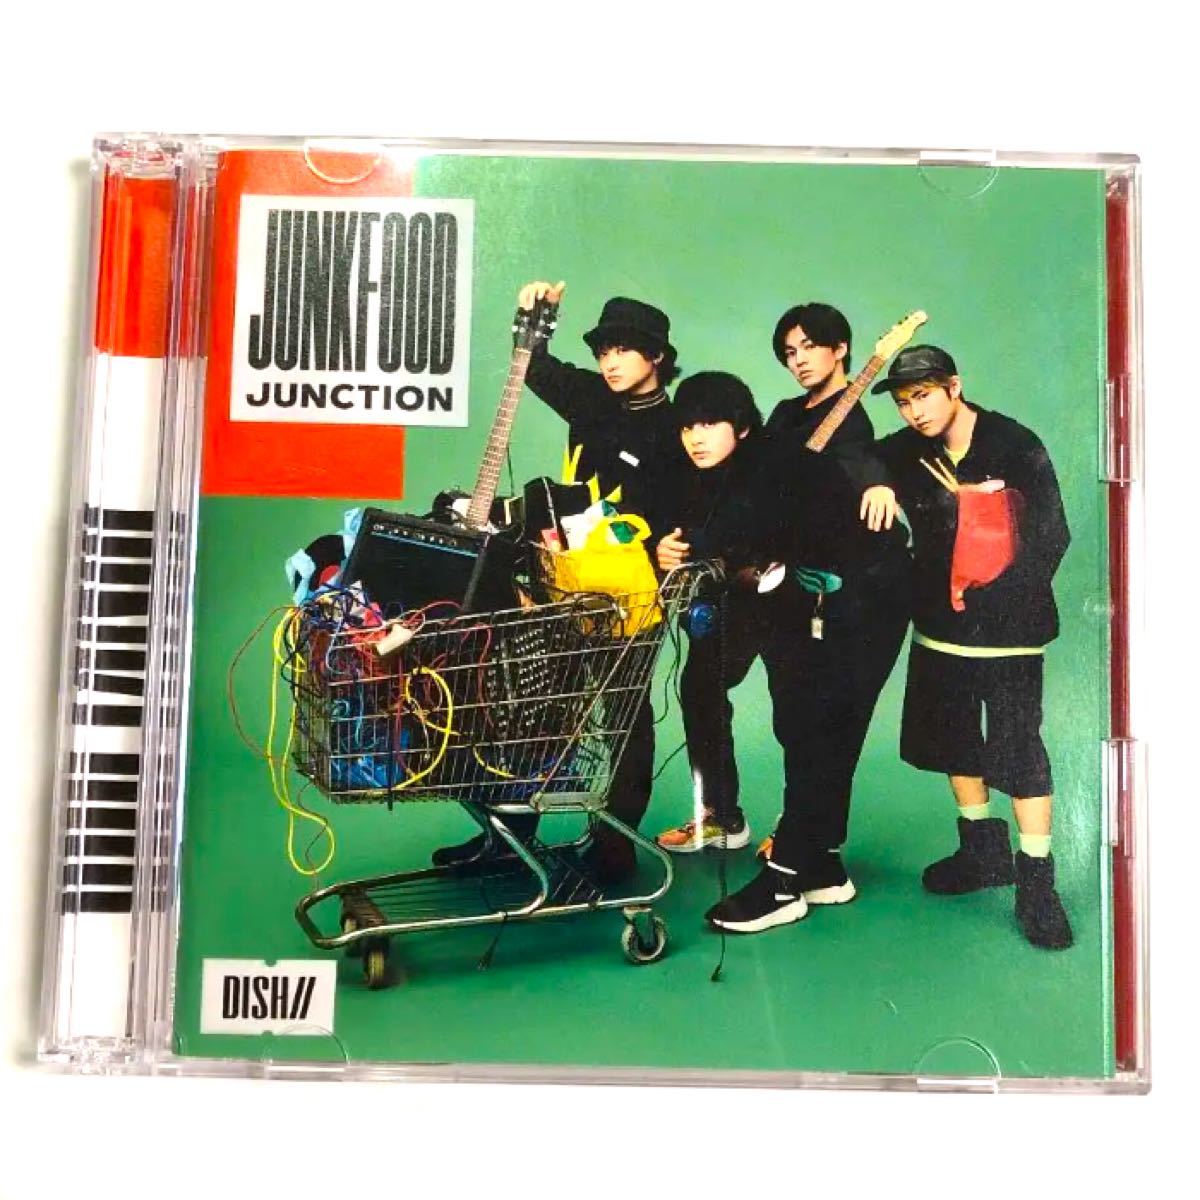 DISH// junk food junction 初回限定盤A DVD CD｜PayPayフリマ